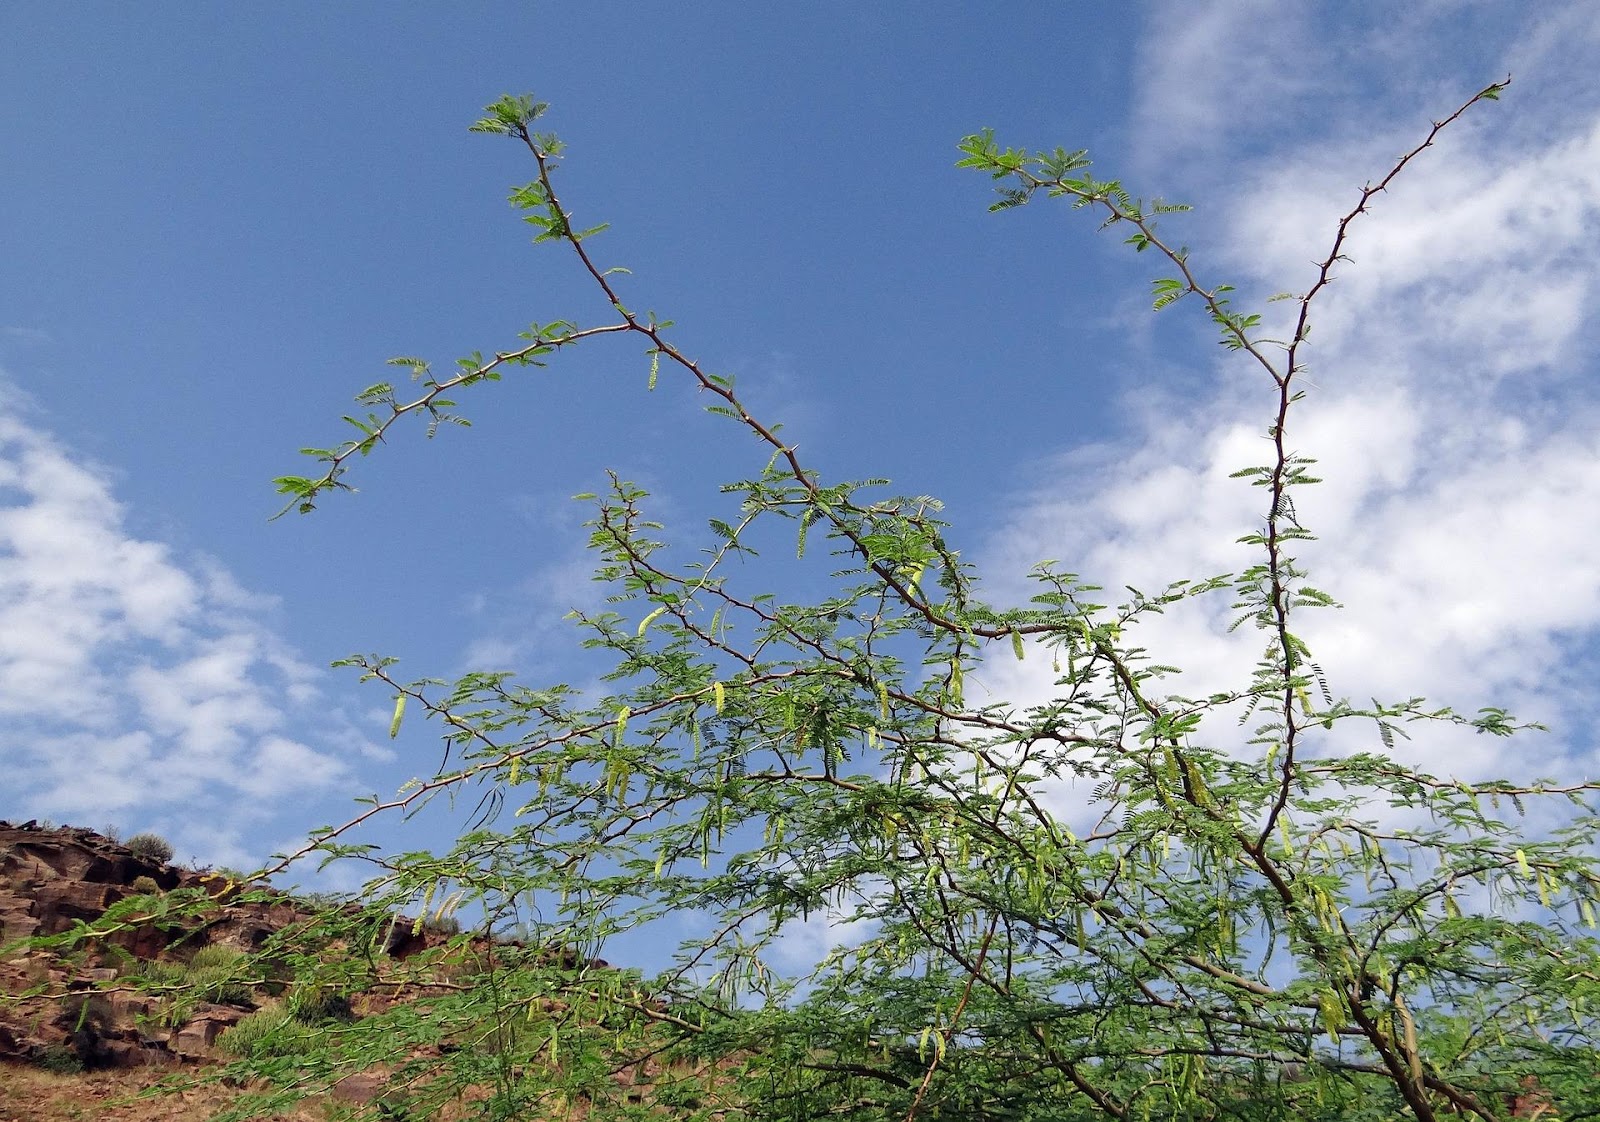 Prosopis is an invasive species in India